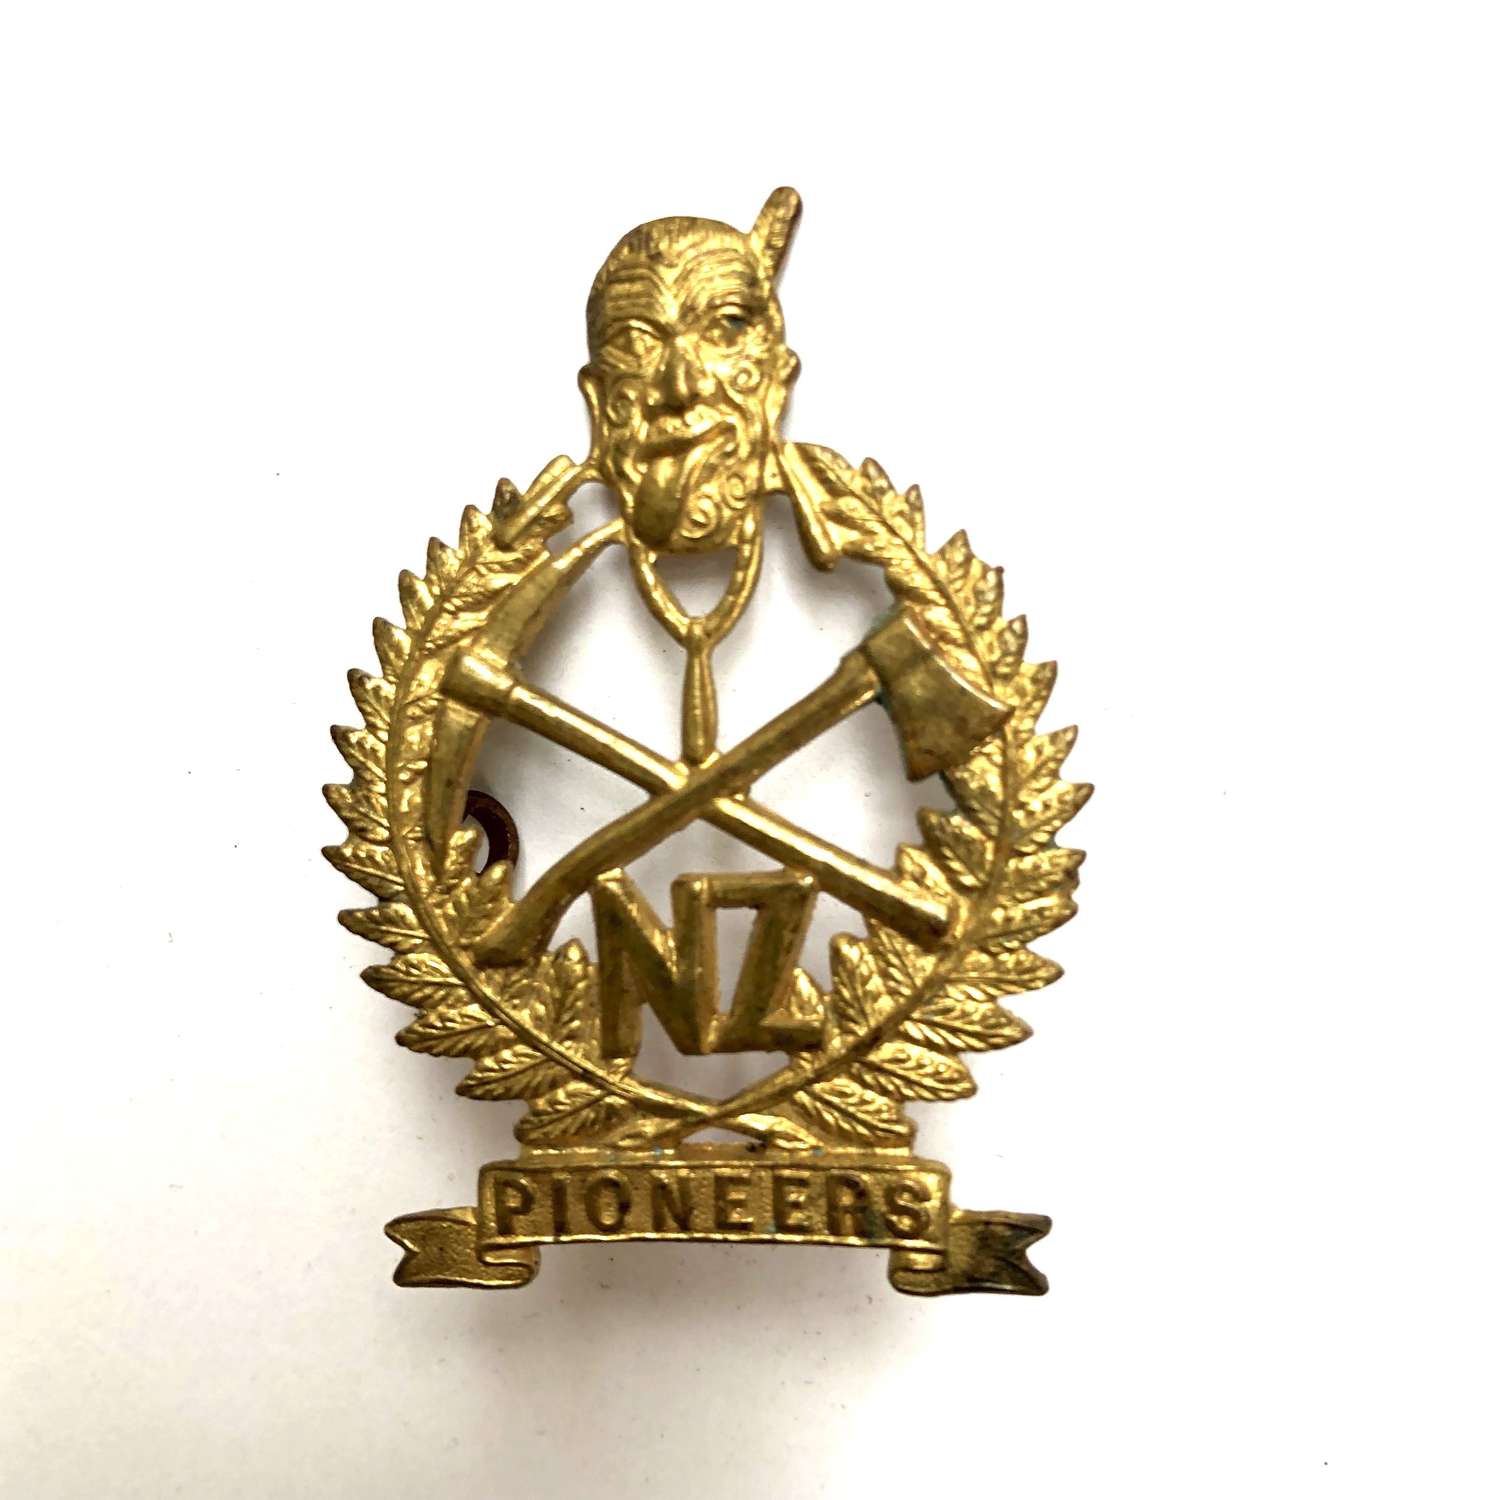 New Zealand Pioneers WW1 cap badge by Gaunt, London